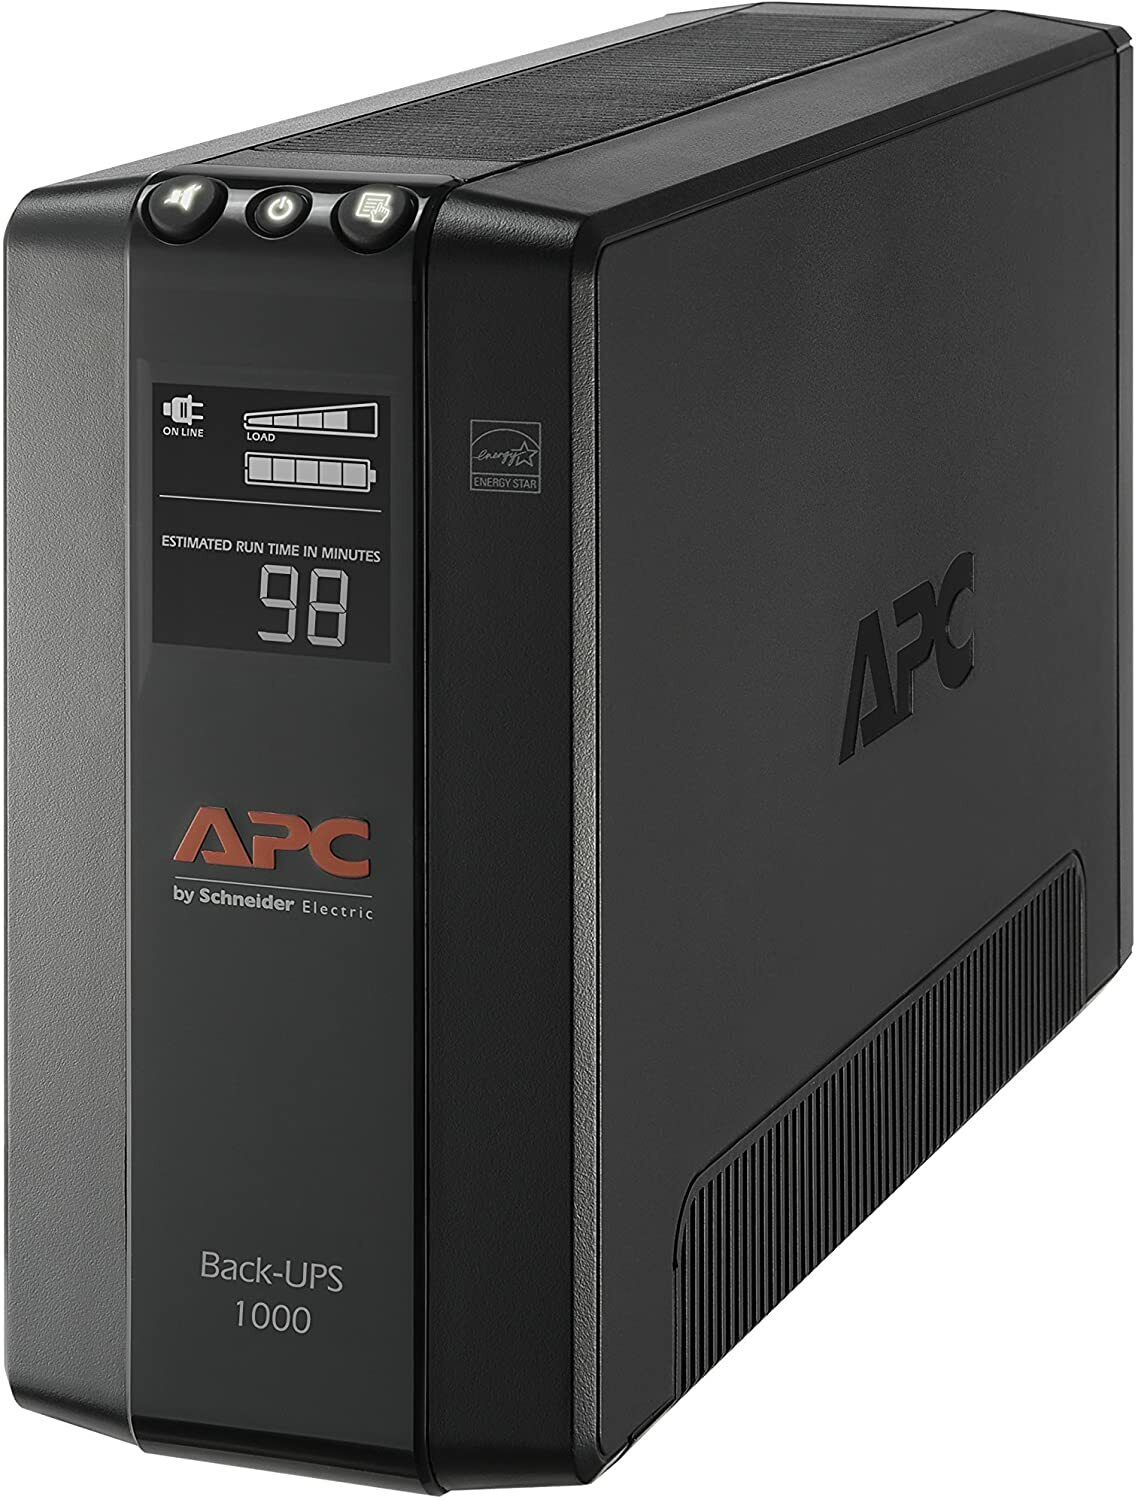 APC BX1000M-LM60 Back-UPS Pro 1000VA Battery Back-Up System - Black, Brand New